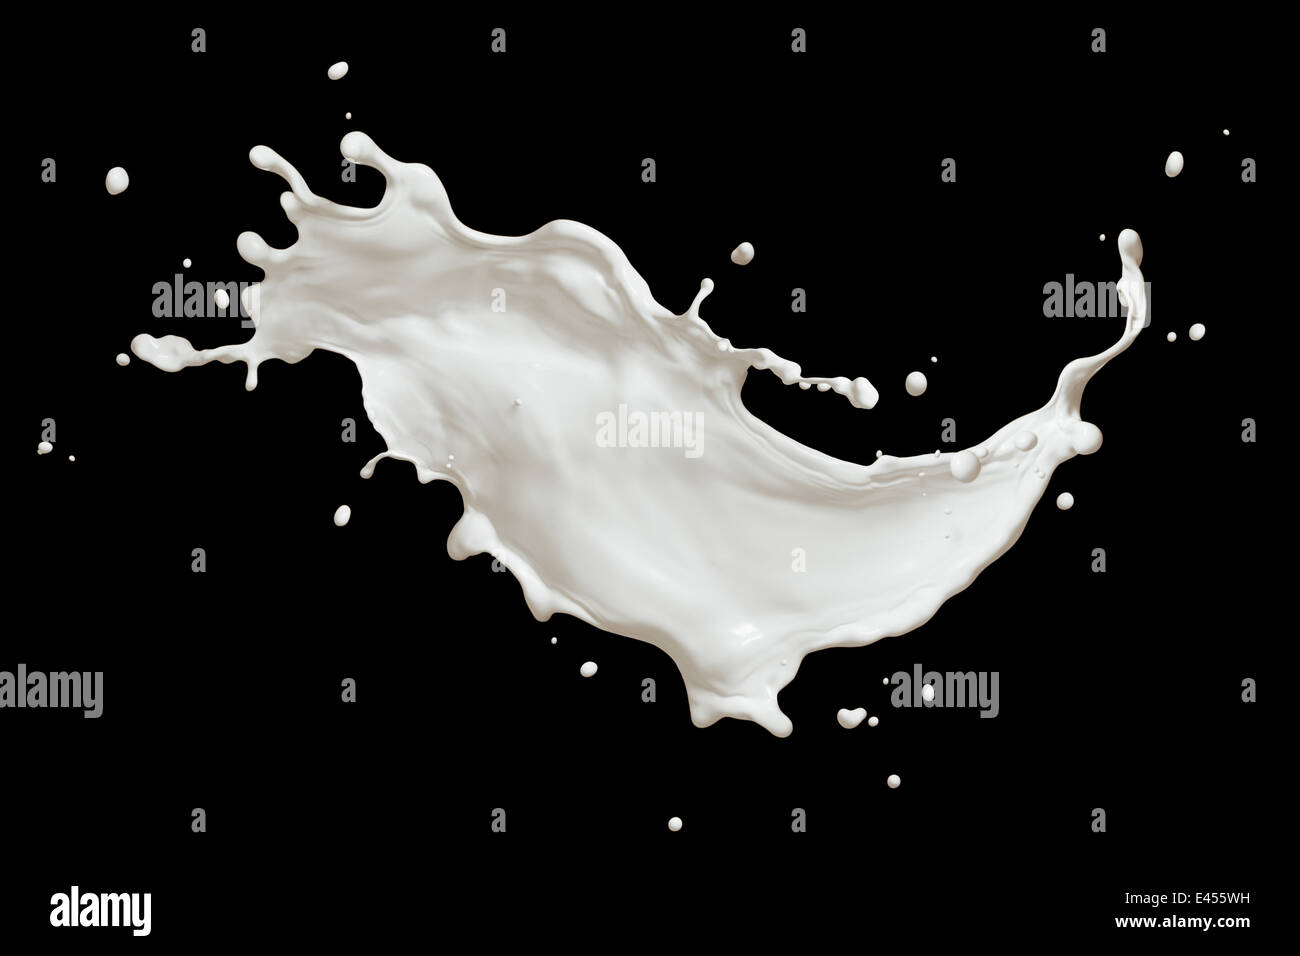 milk or white liquid splash isolated on black background Stock Photo